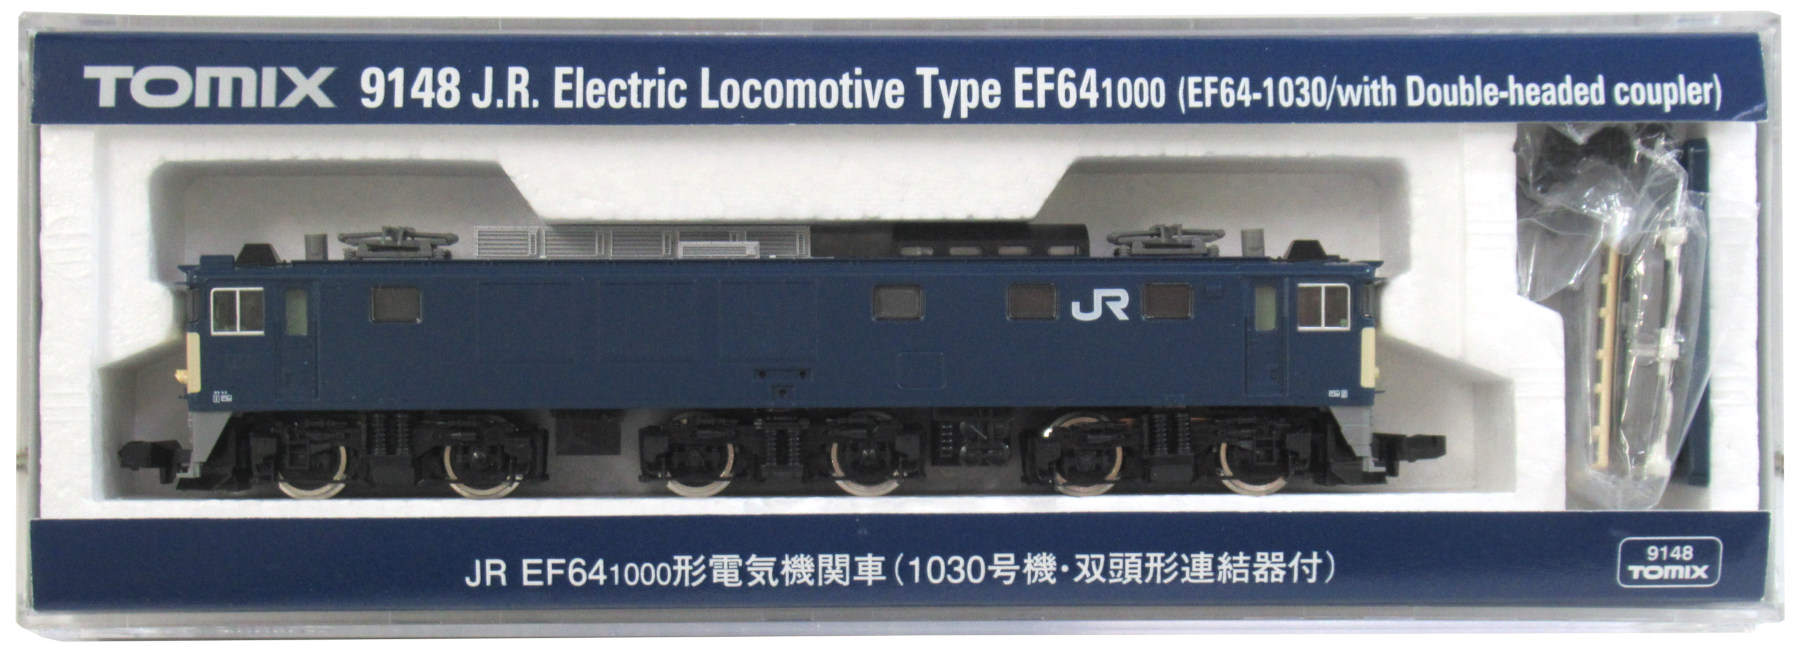 9148 EF64-1000 1030号機・双頭連結器